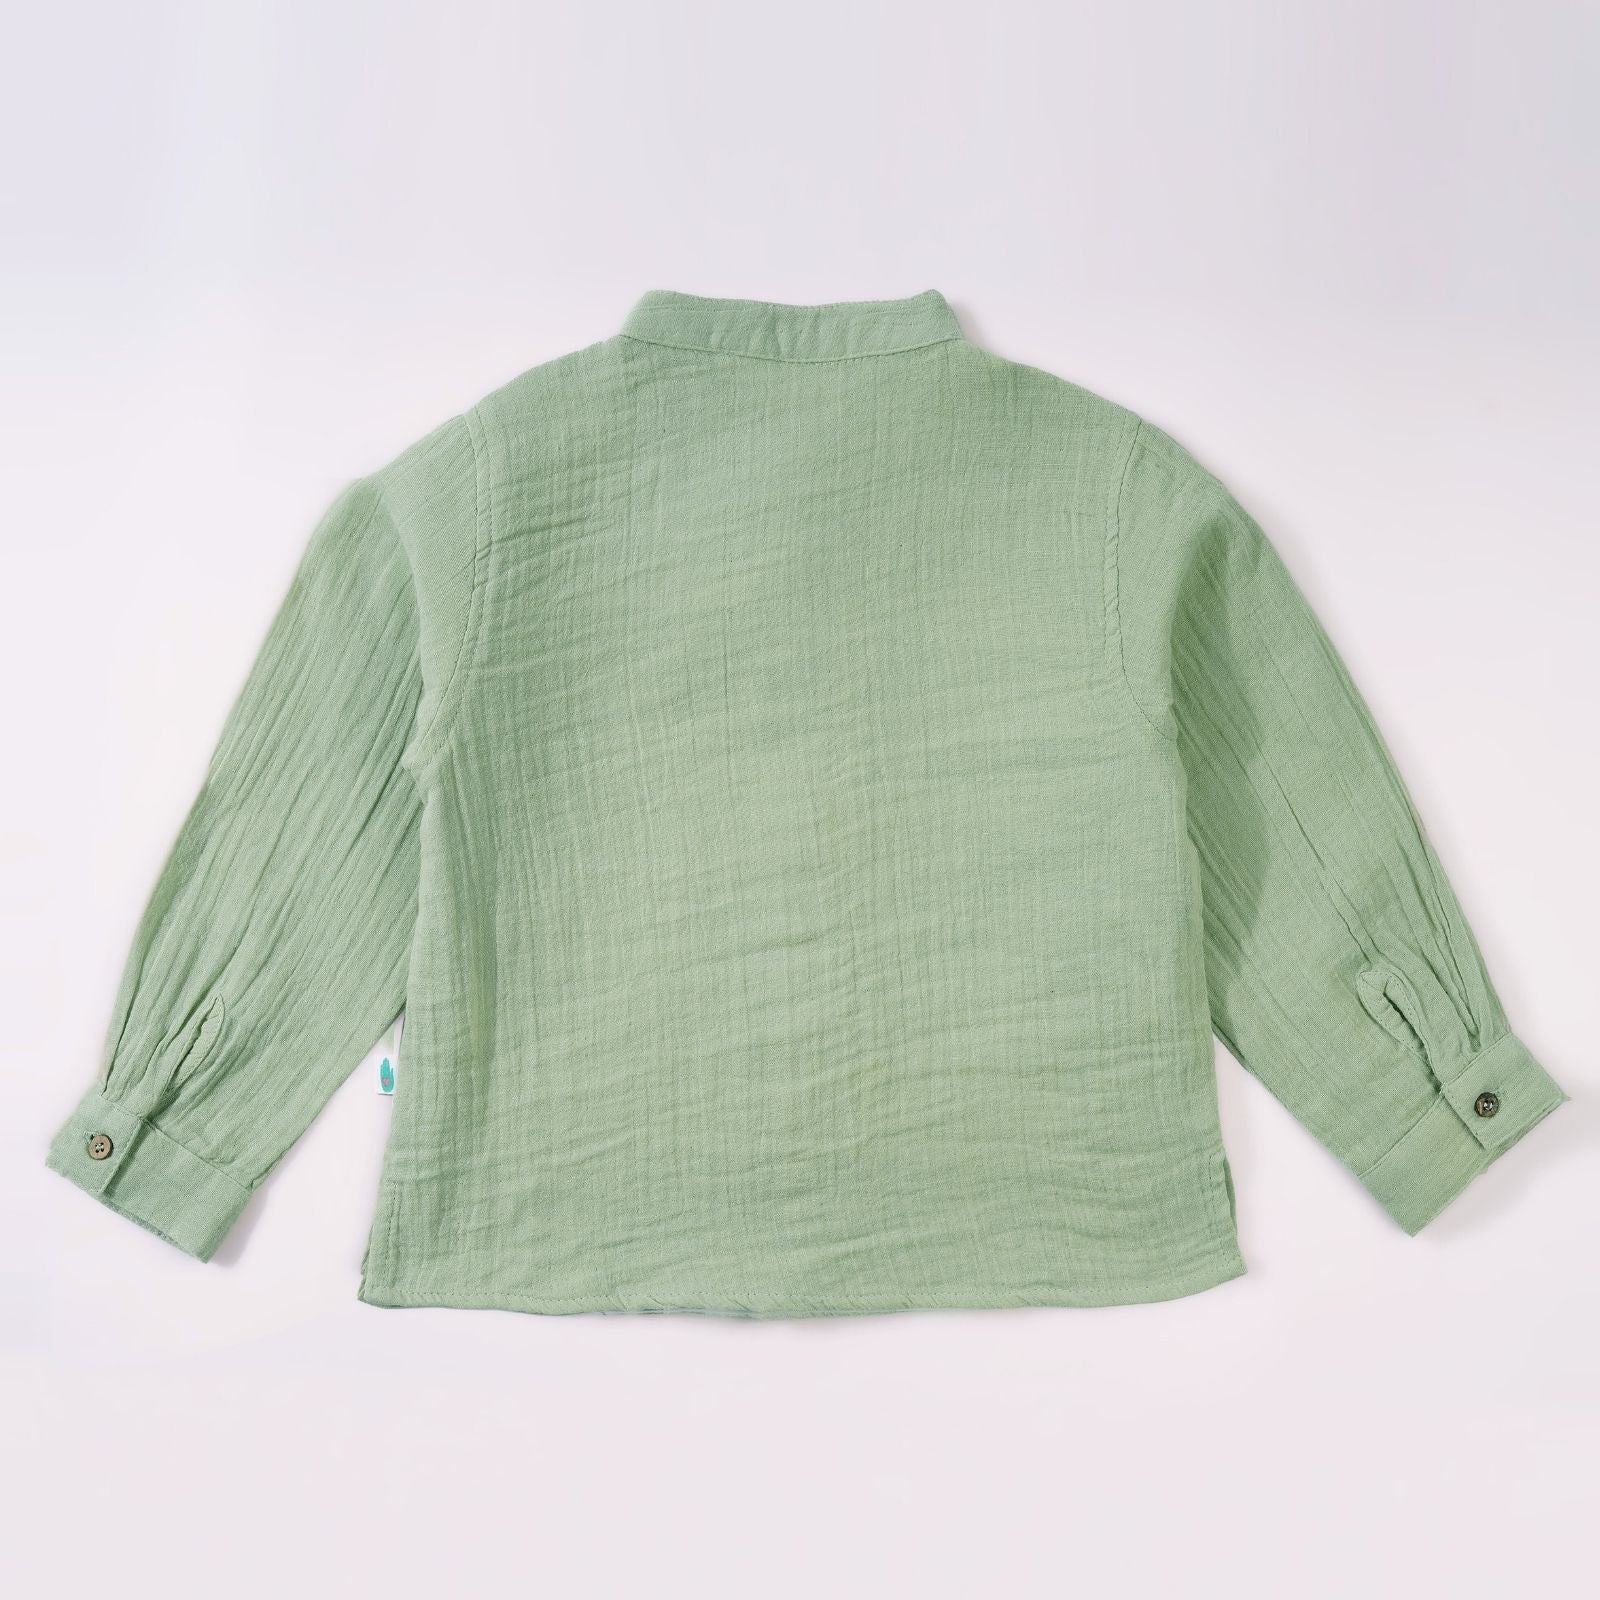 Greendeer Loko Full Sleeve Shirt - Basil Green